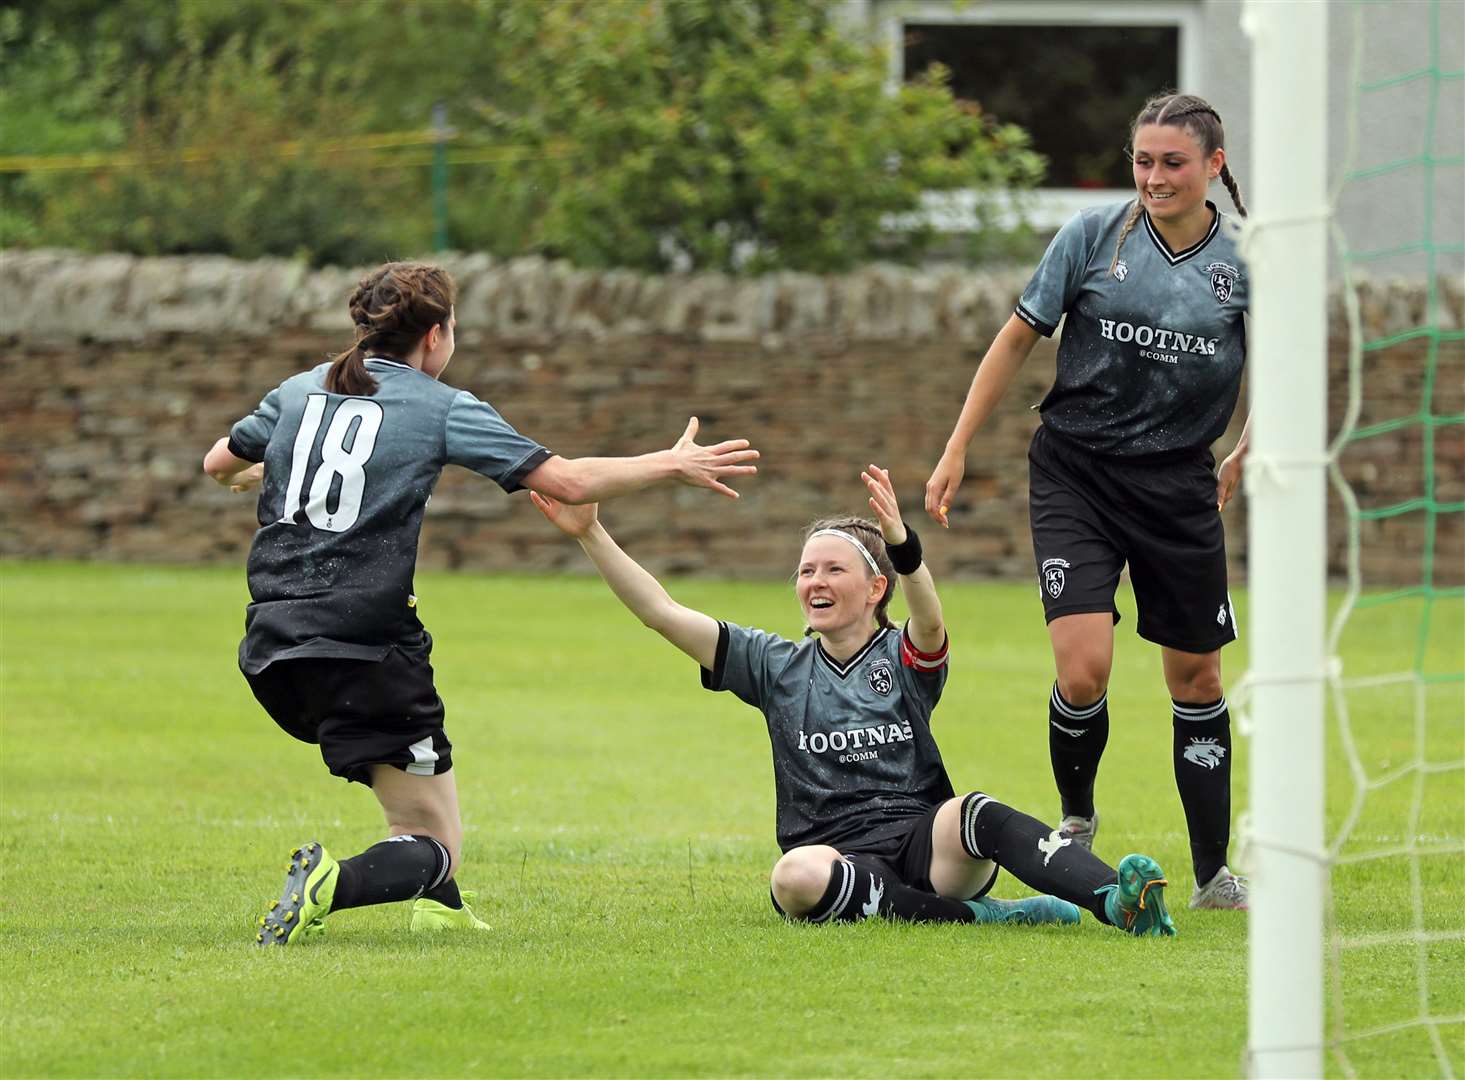 Carly Erridge (sitting) celebrates scoring the 2nd goal with No.18 Sopie Kinghorn and Sarah Henderson. Photo: James Gunn